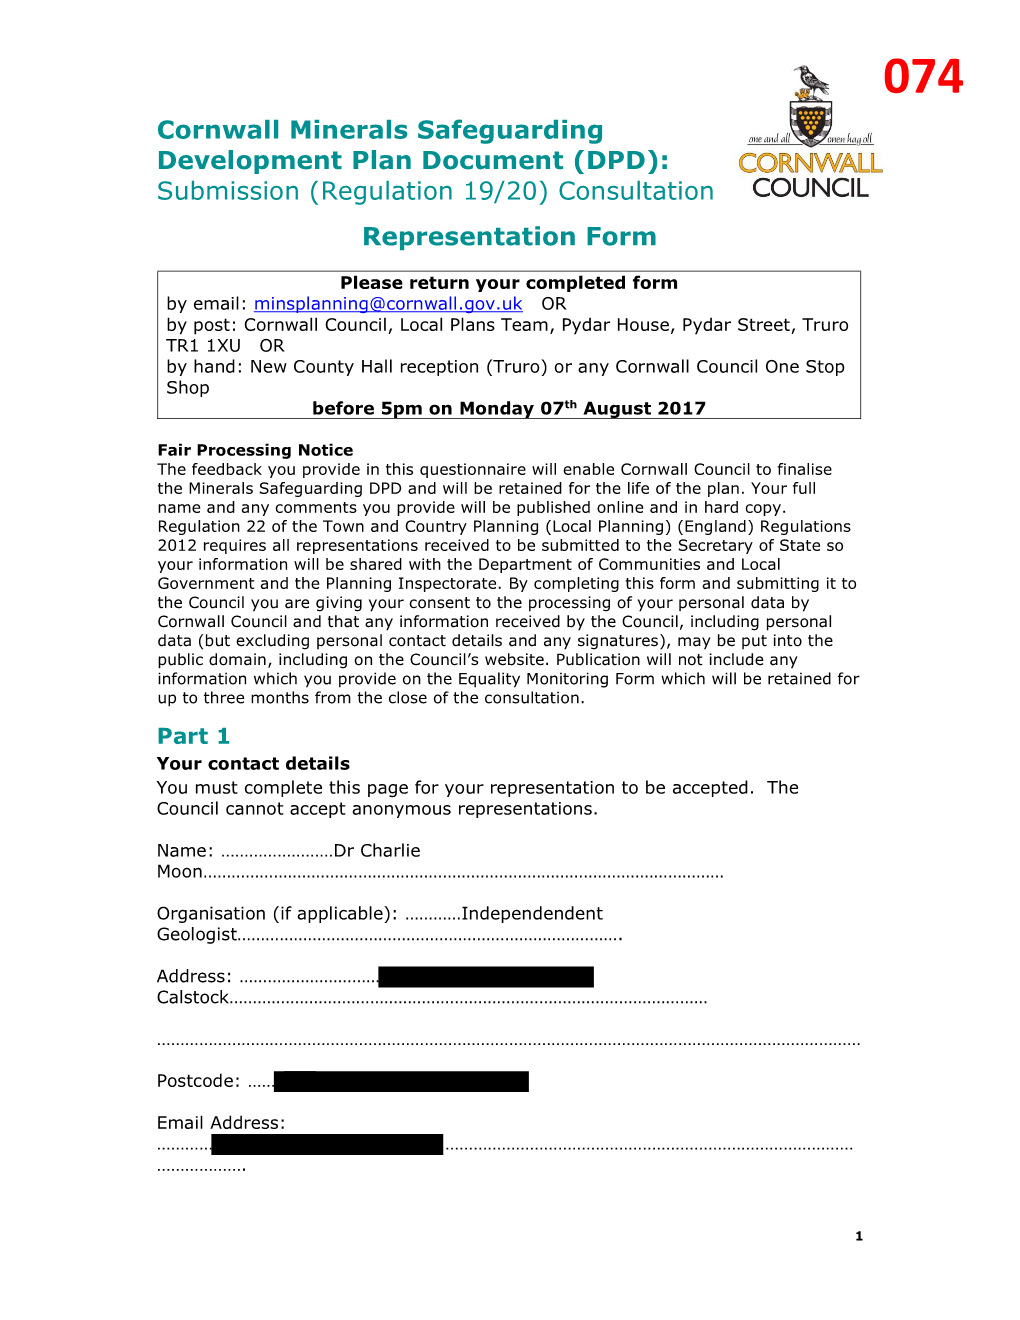 Cornwall Minerals Safeguarding Development Plan Document (DPD): Submission (Regulation 19/20) Consultation Representation Form